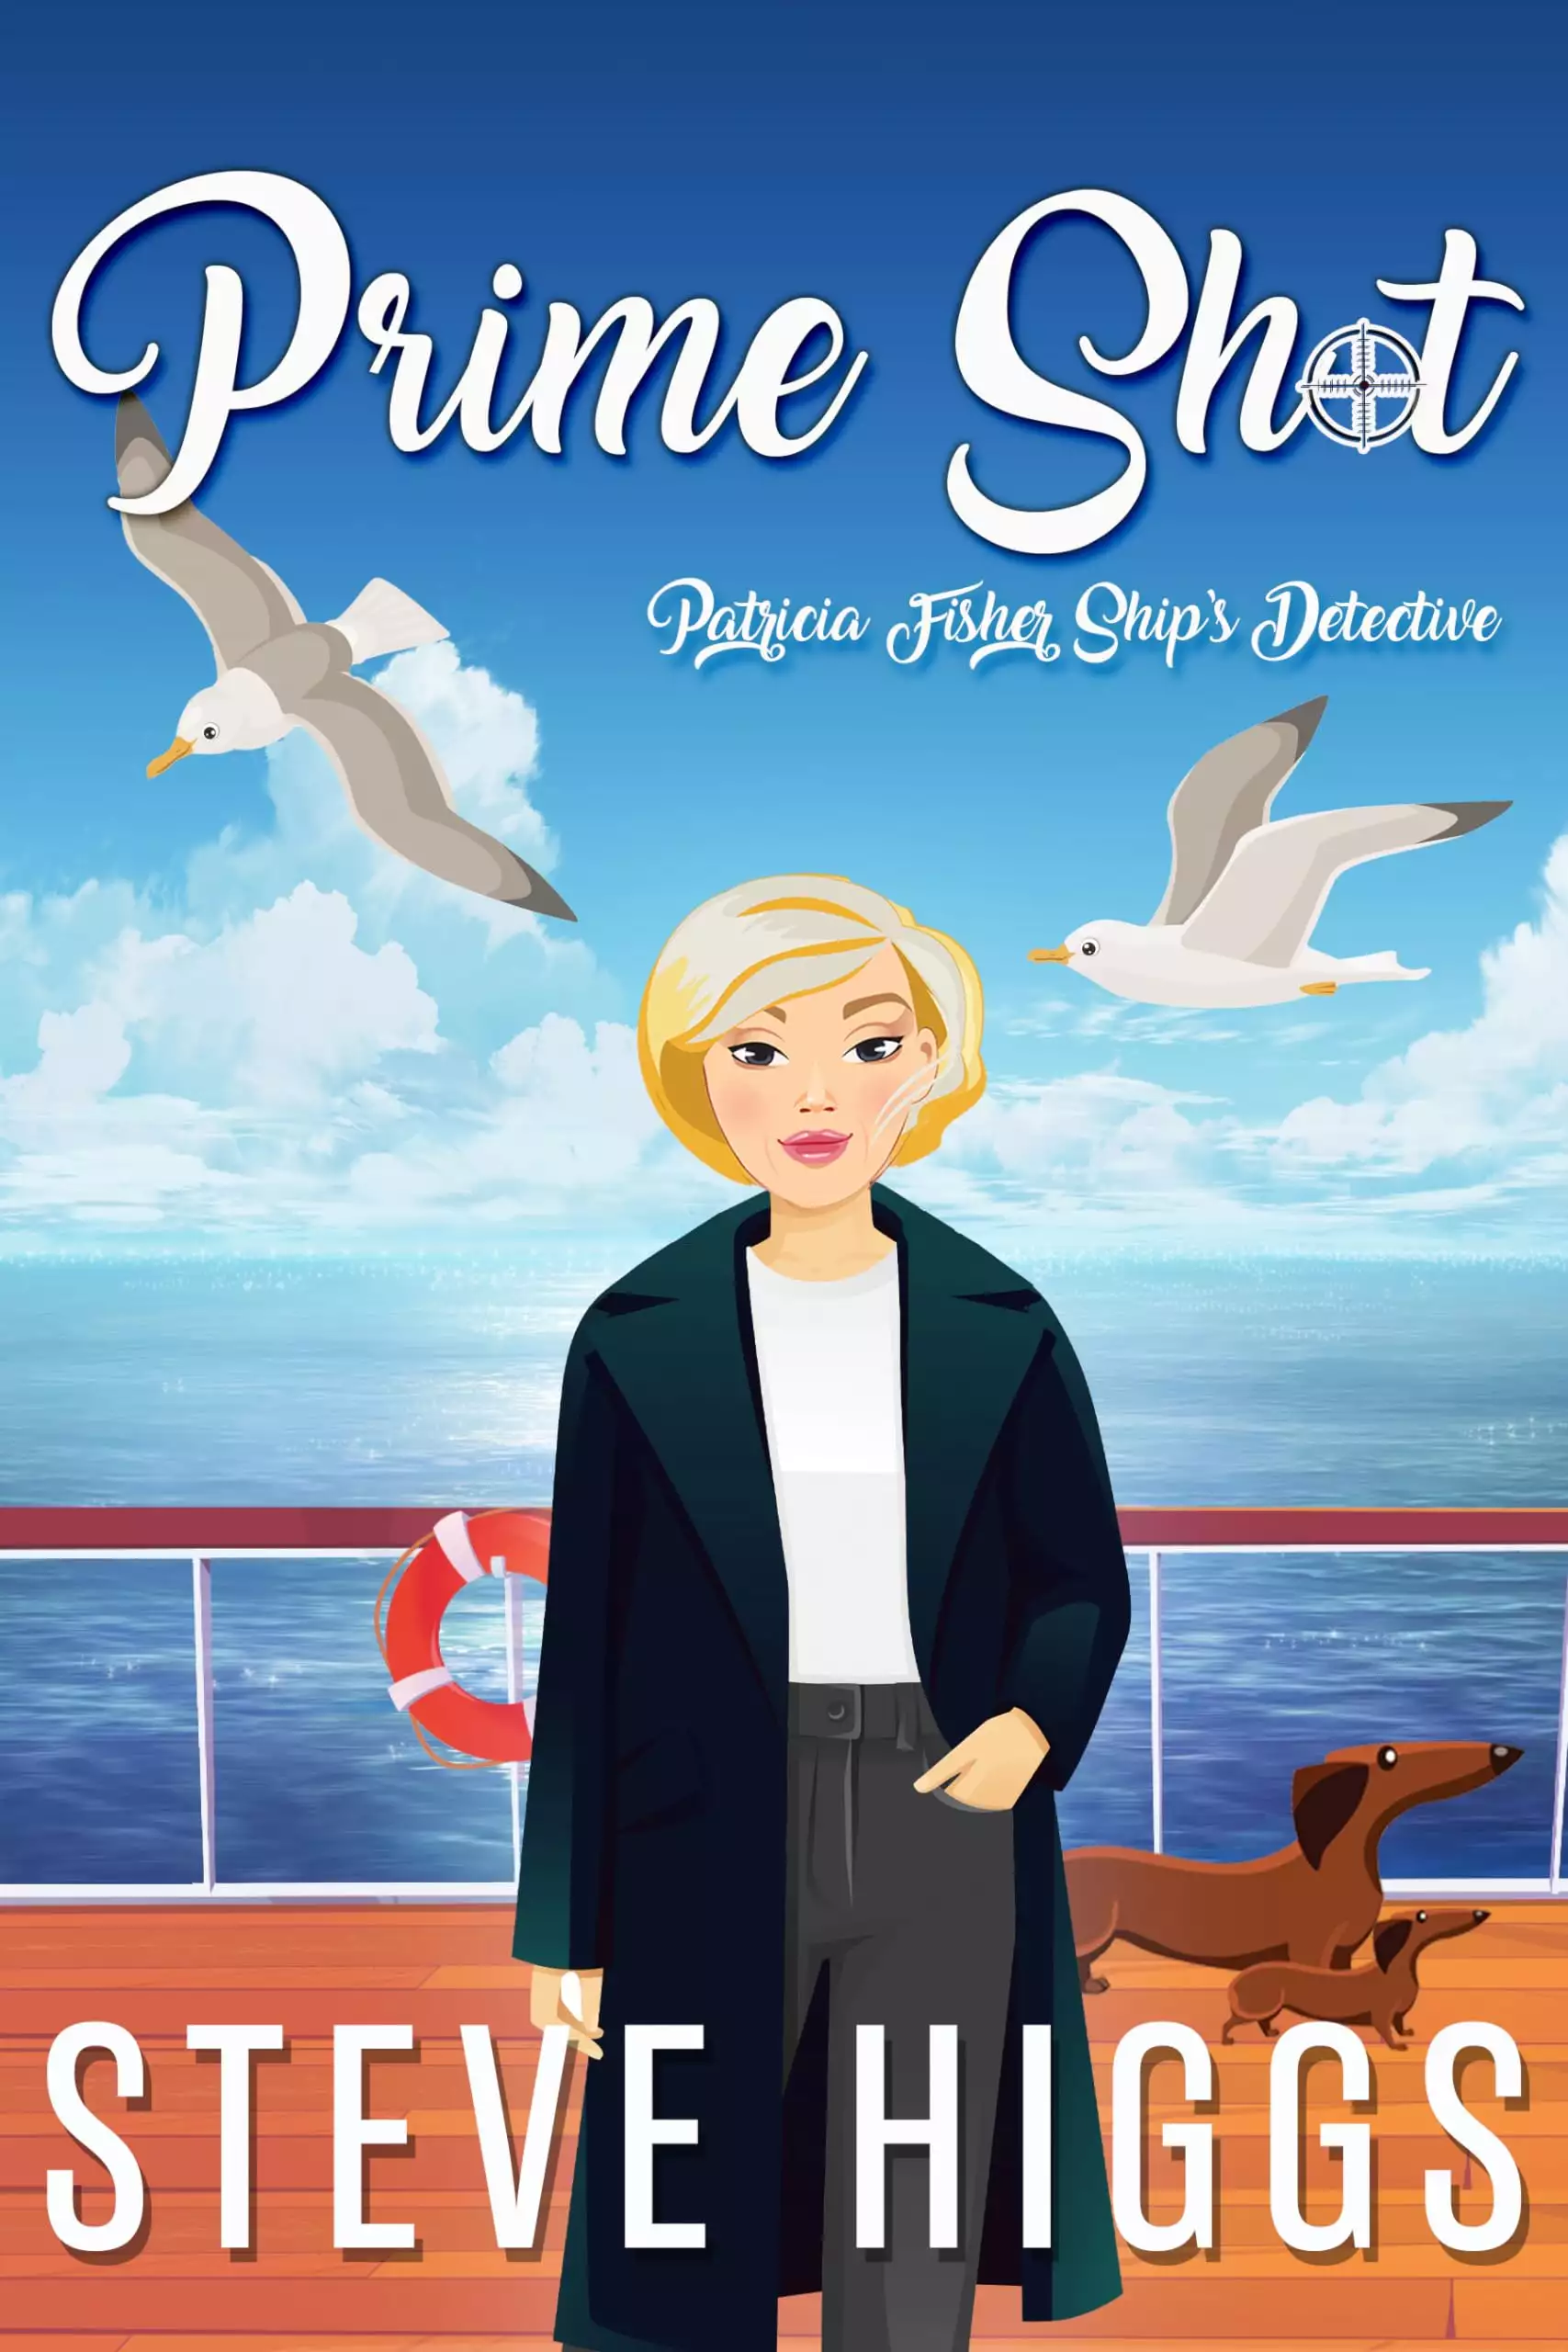 Prime Shot: Patricia Fisher: Ship's Detective - A Cozy Mystery Adventure